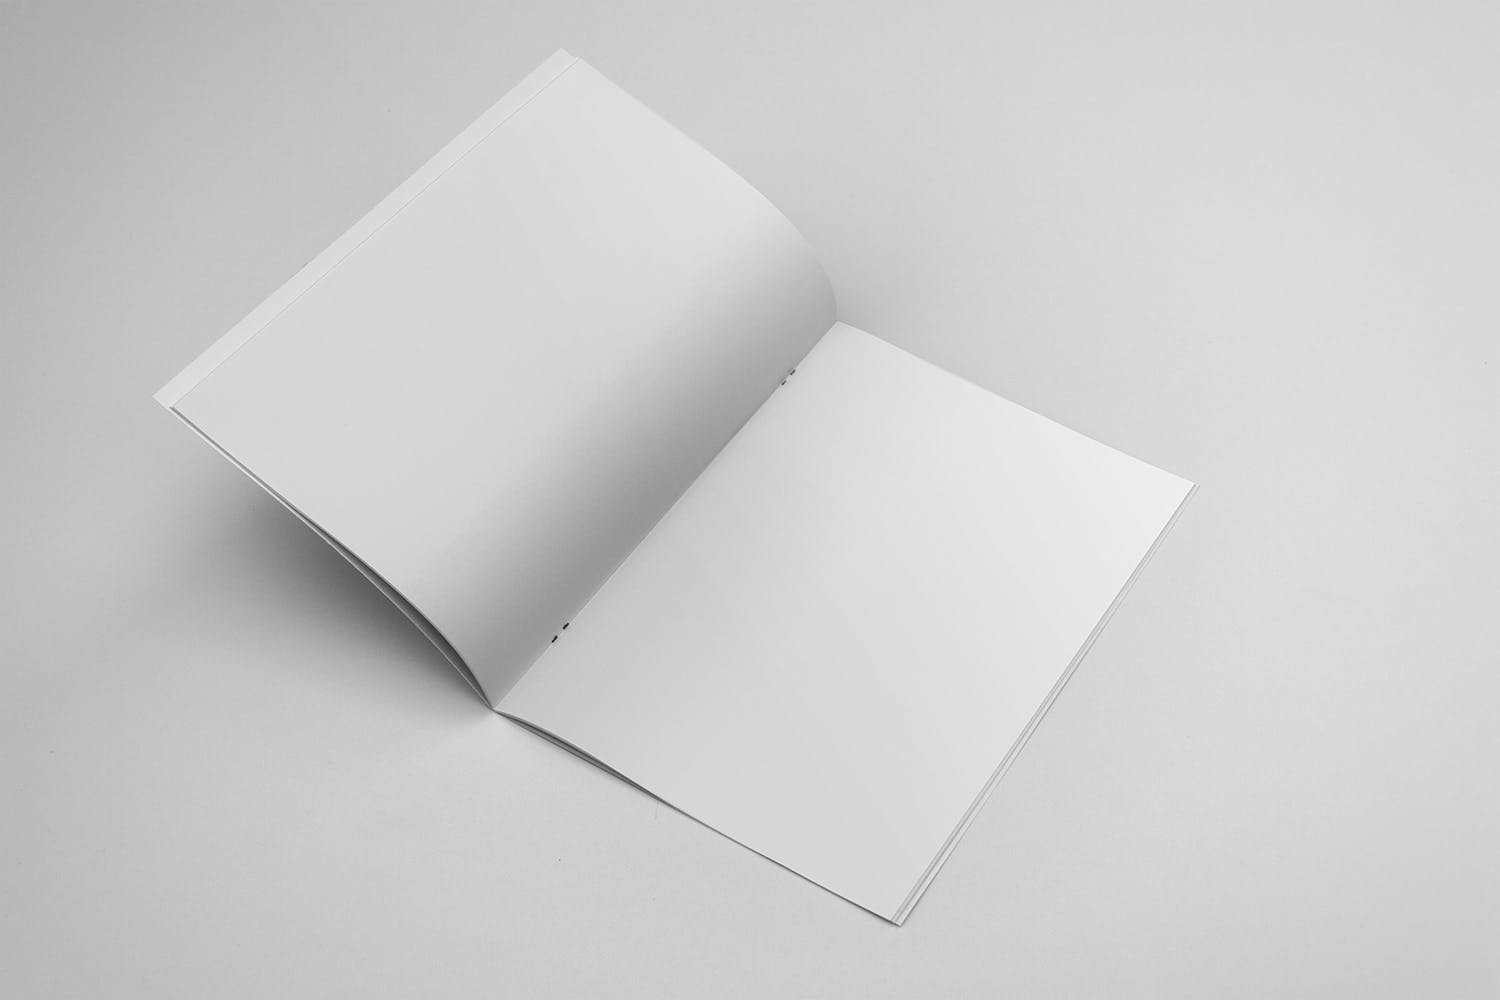 A4尺寸企业/品牌宣传册折叠页效果图样机素材库精选 A4 Brochure Mockup Folded Page插图(1)